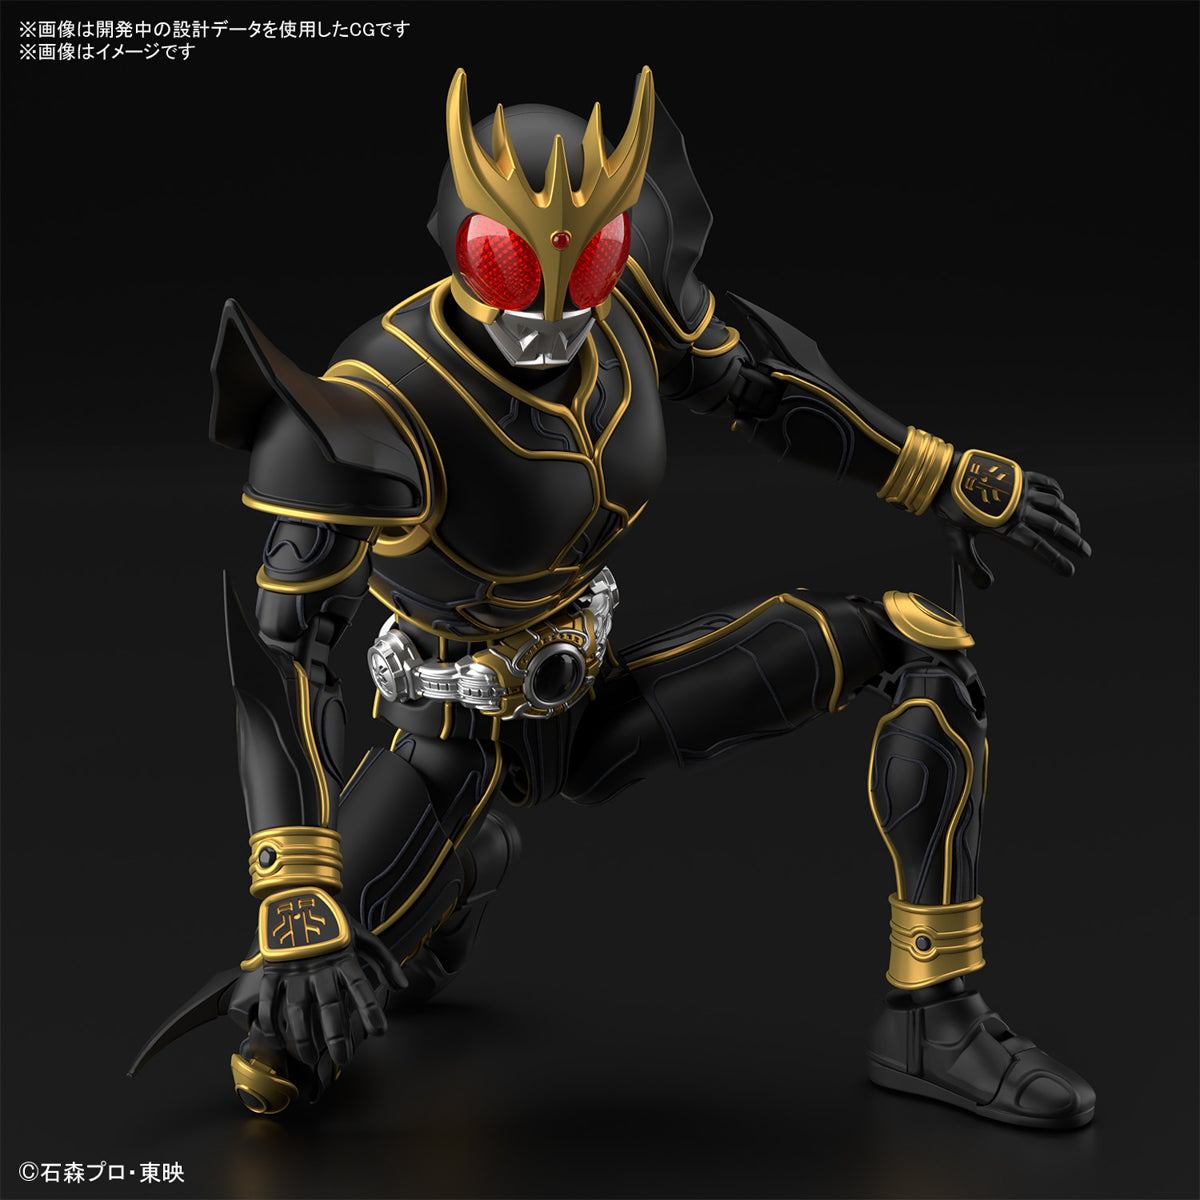 [PRE-ORDER] Figure-rise Standard Kamen Rider Kuuga Ultimate Form